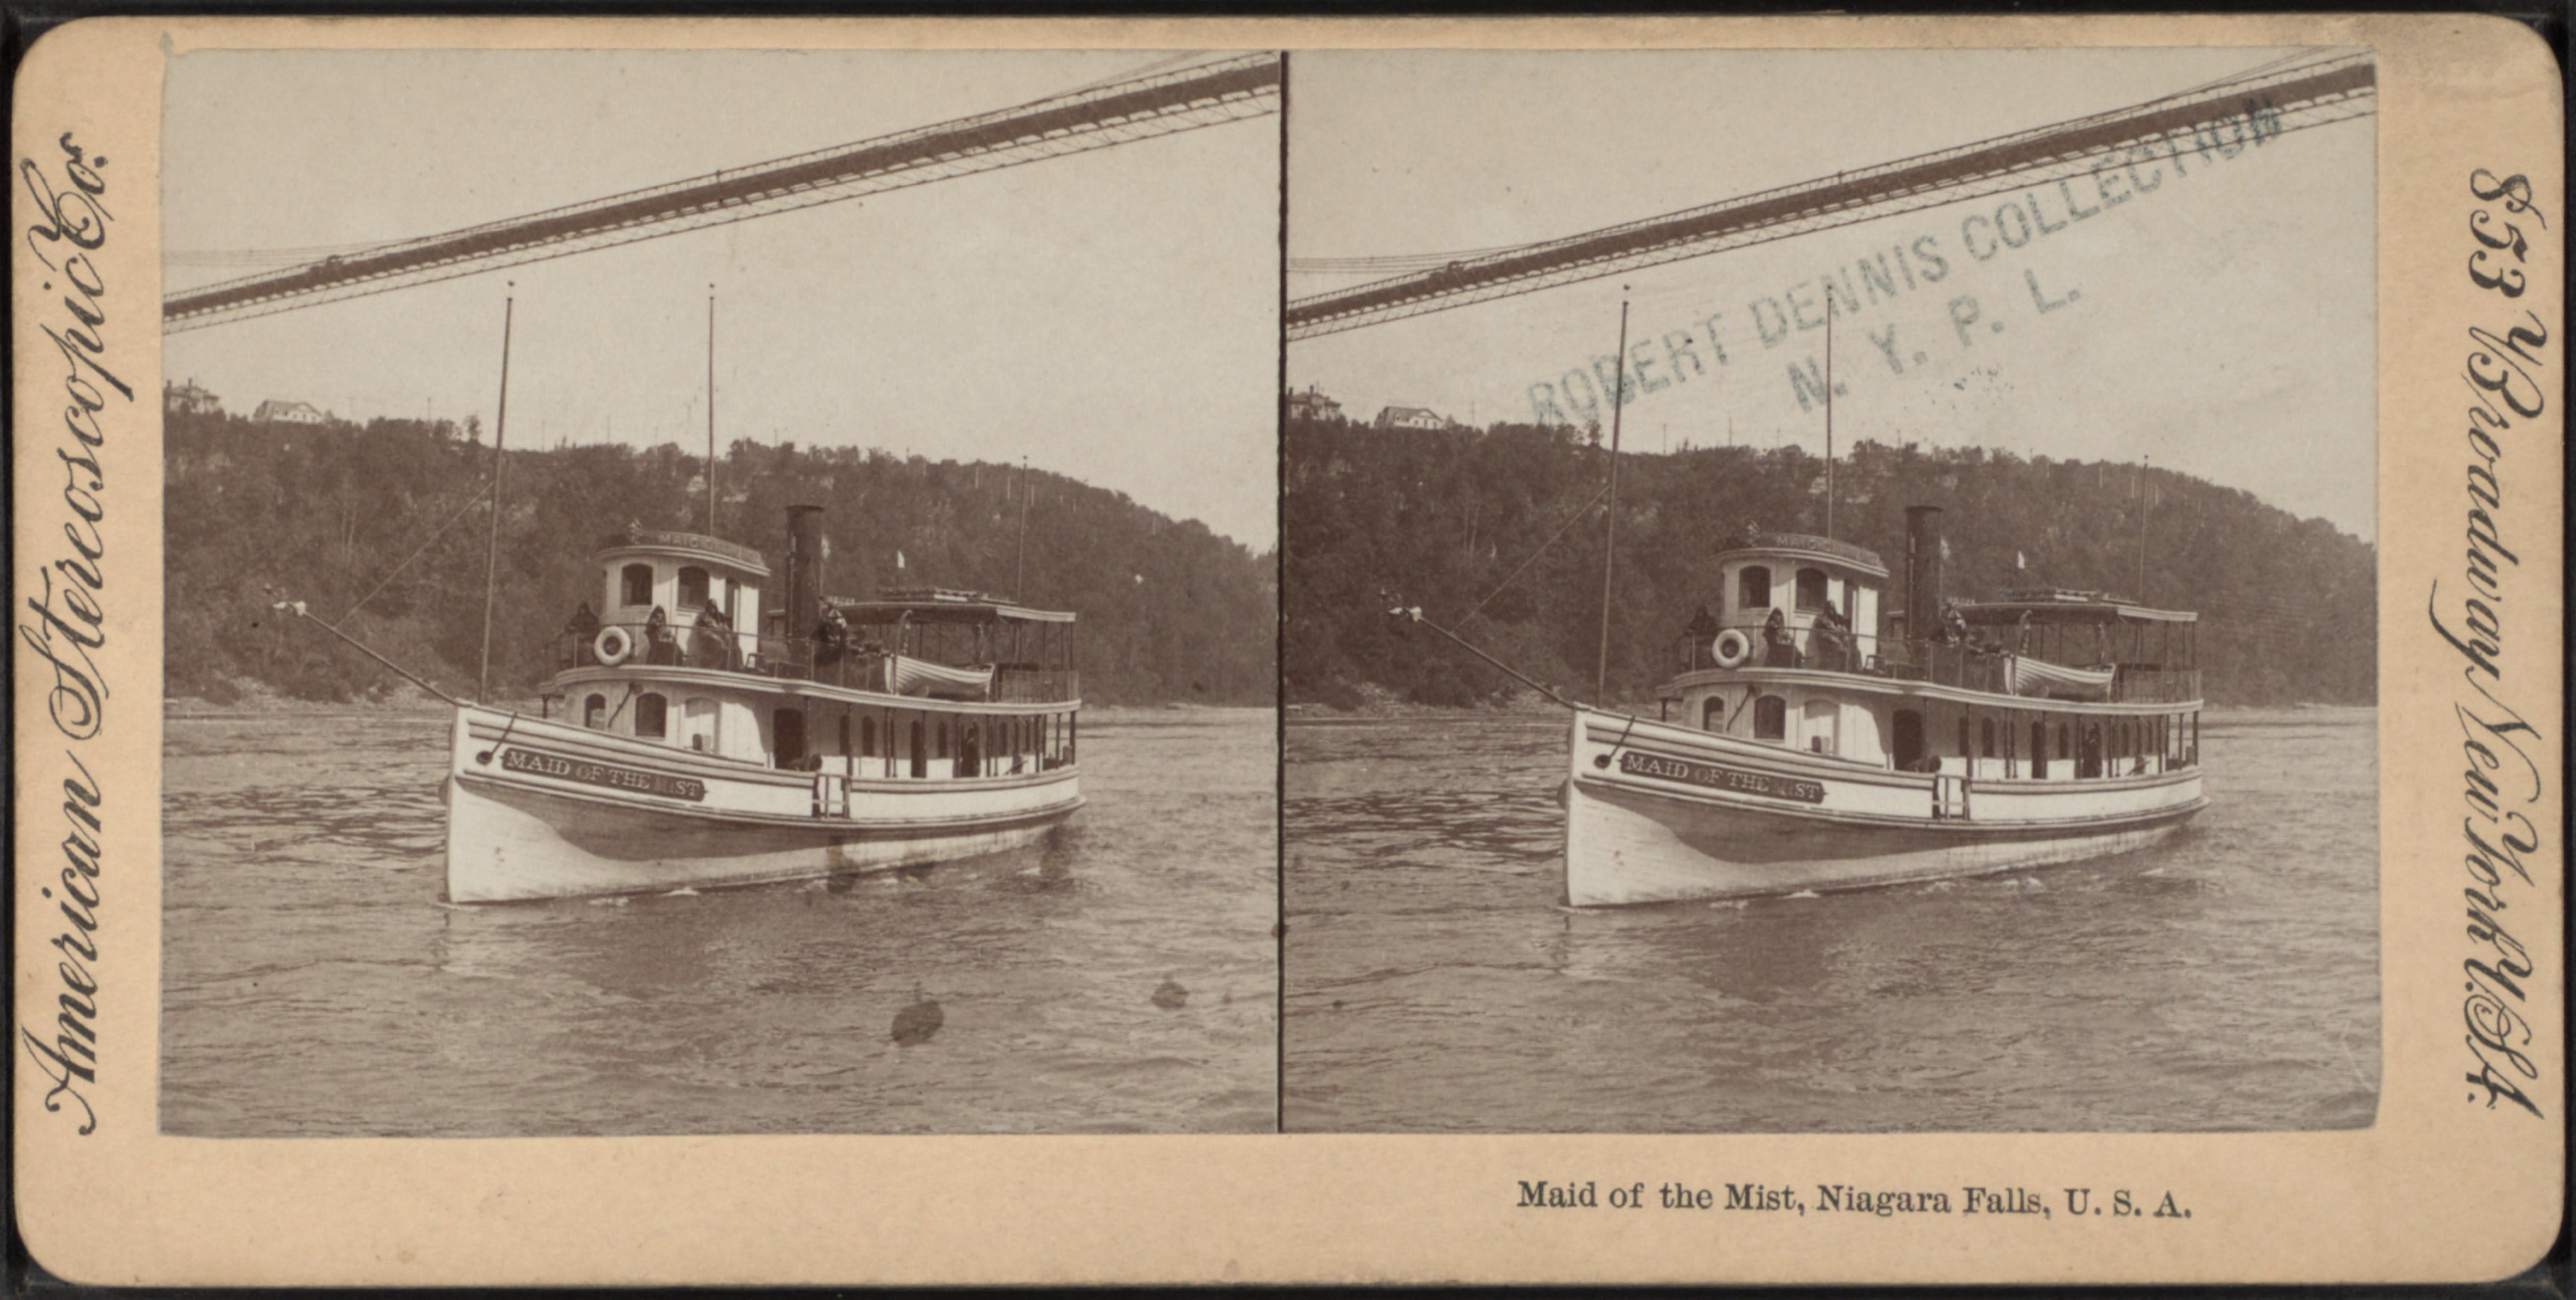 maid_of_the_mist_niagara_falls_u_s_a_by_american_stereoscopic_co_fl_1896-1906.jpg